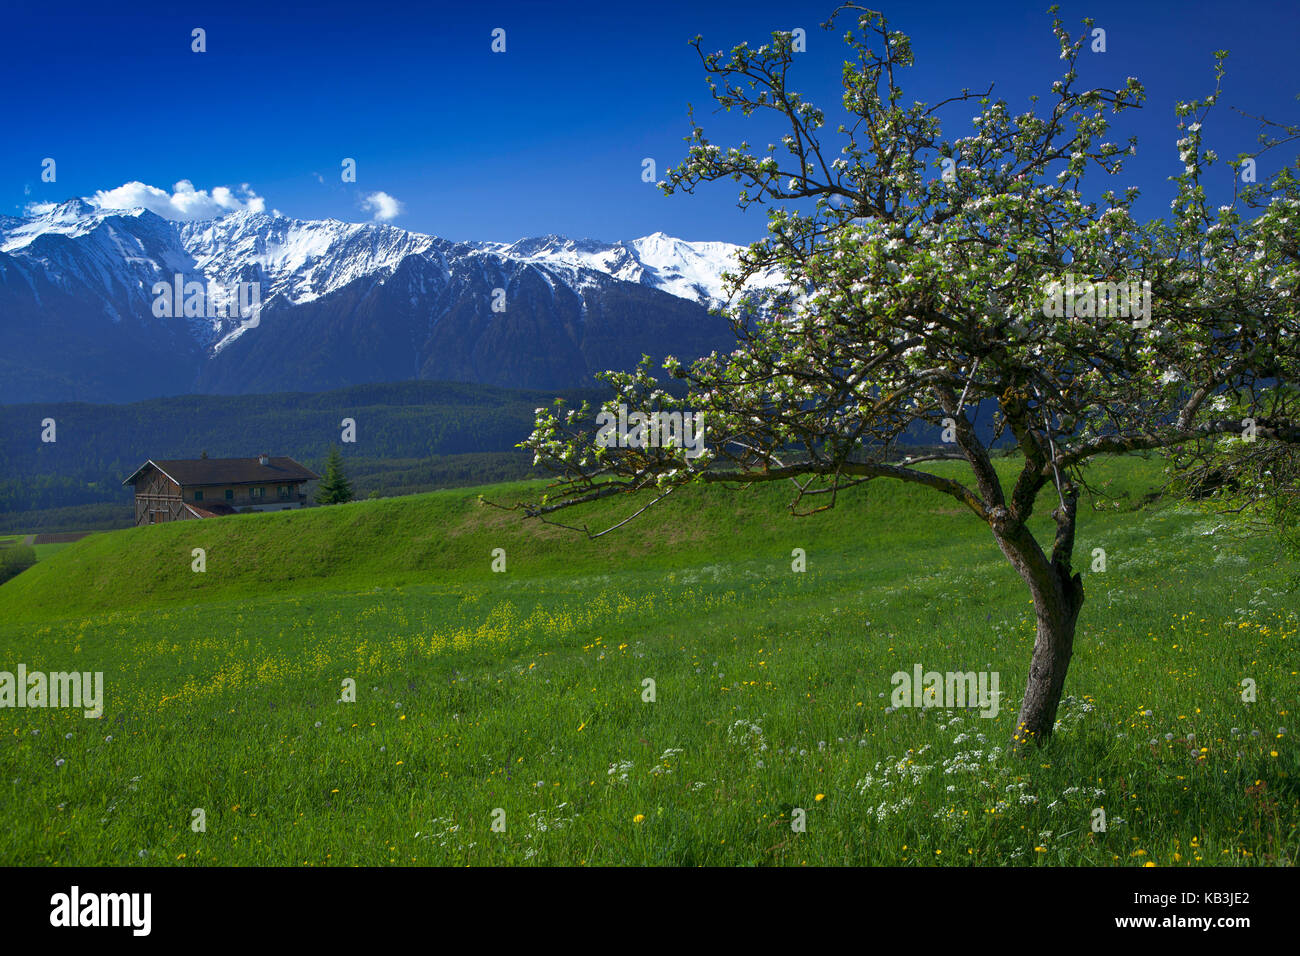 Austria, Tyrol, Wildermieming, mountain doctor's house, Stock Photo